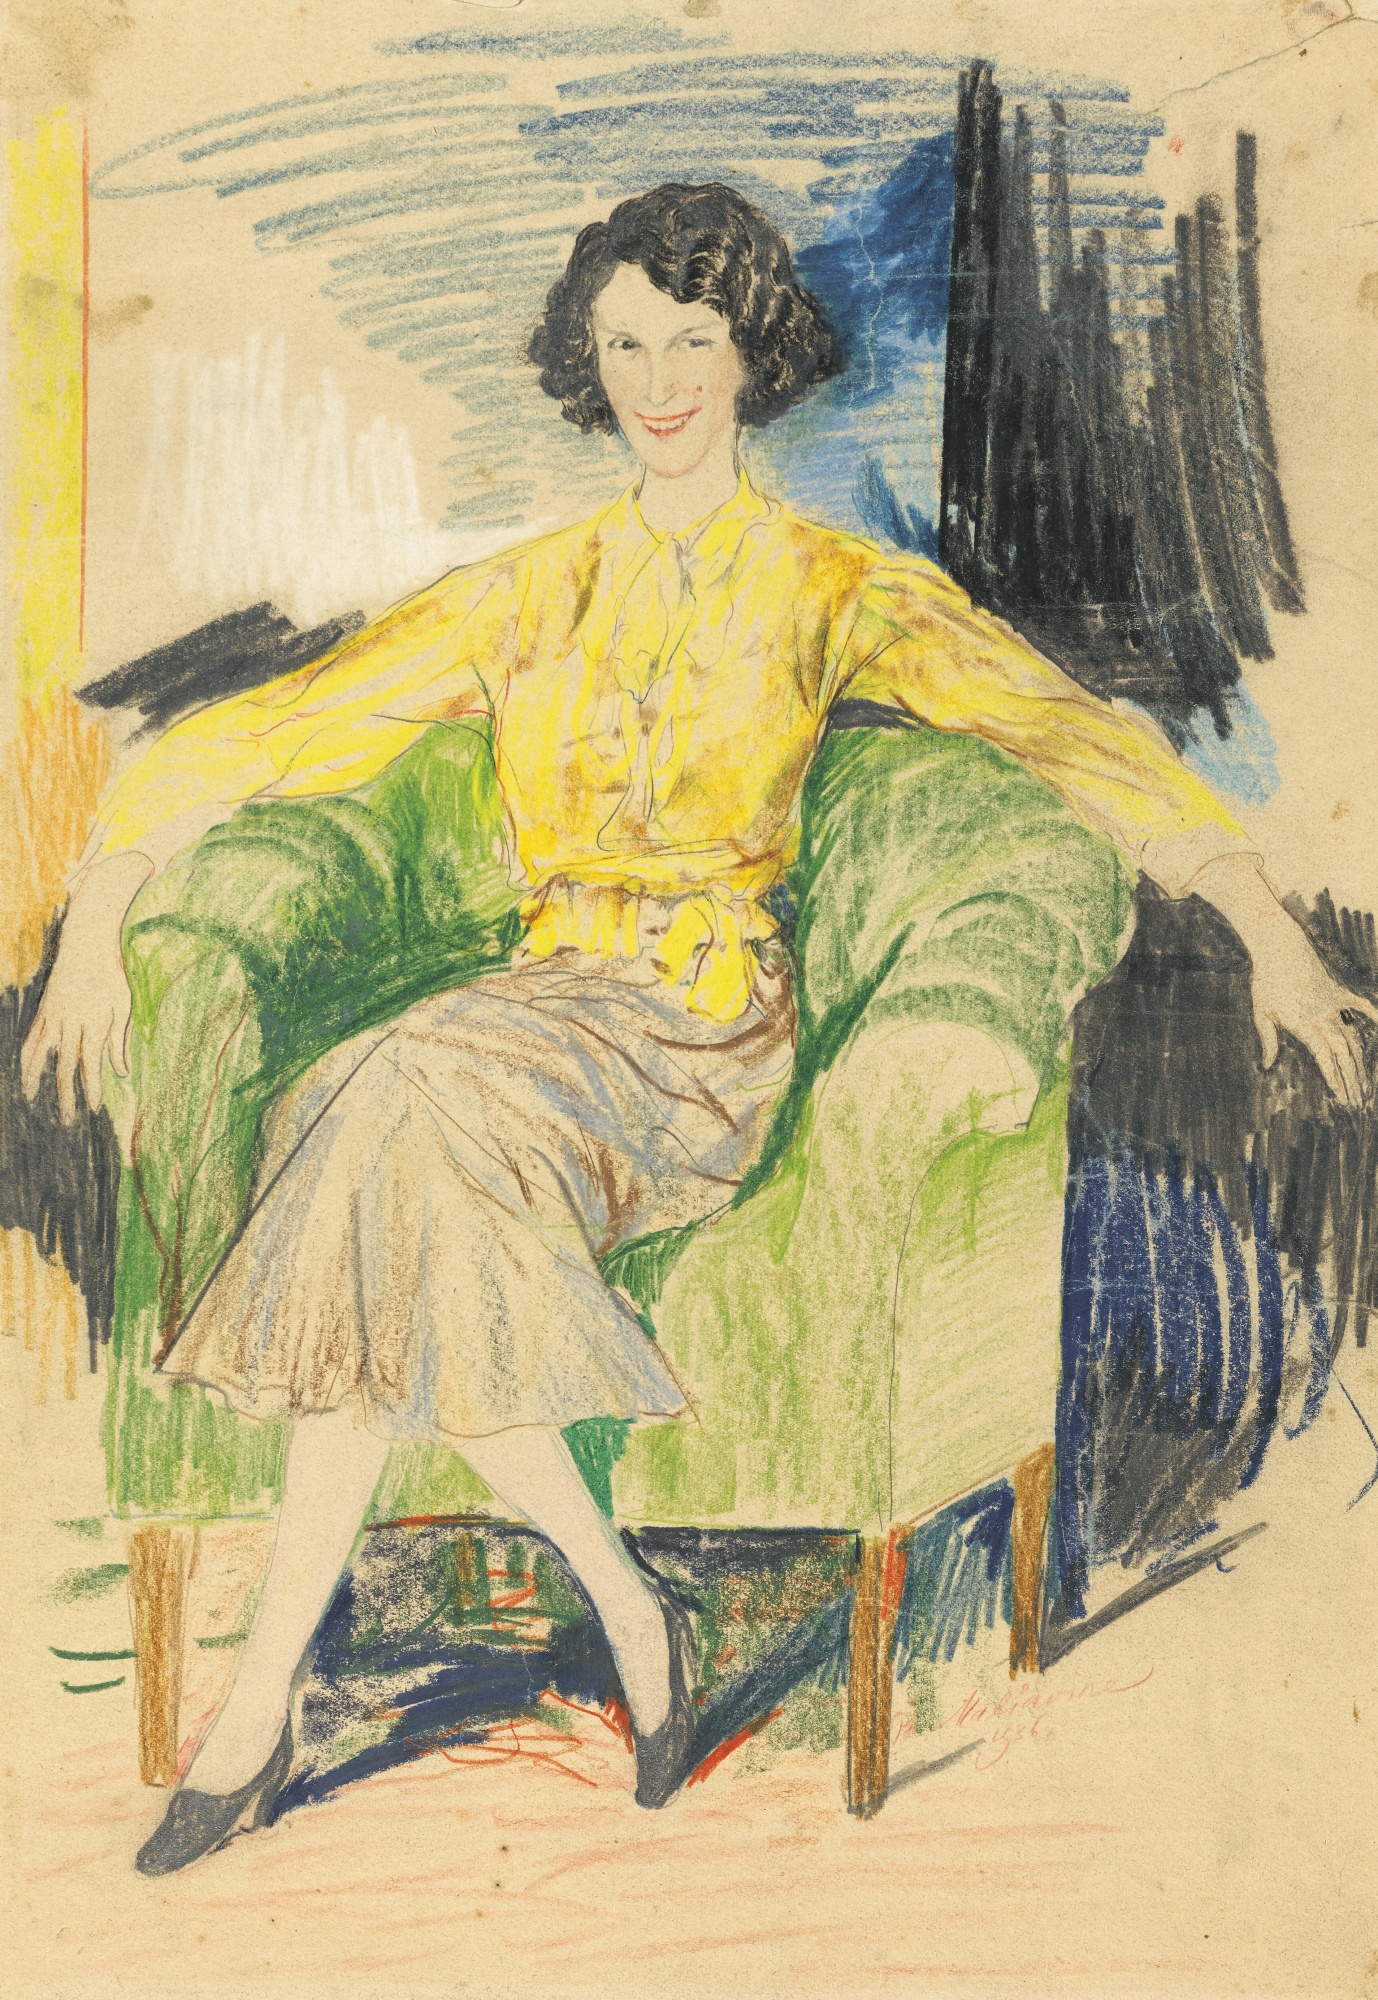 Малявин. Женский портрет. 1936